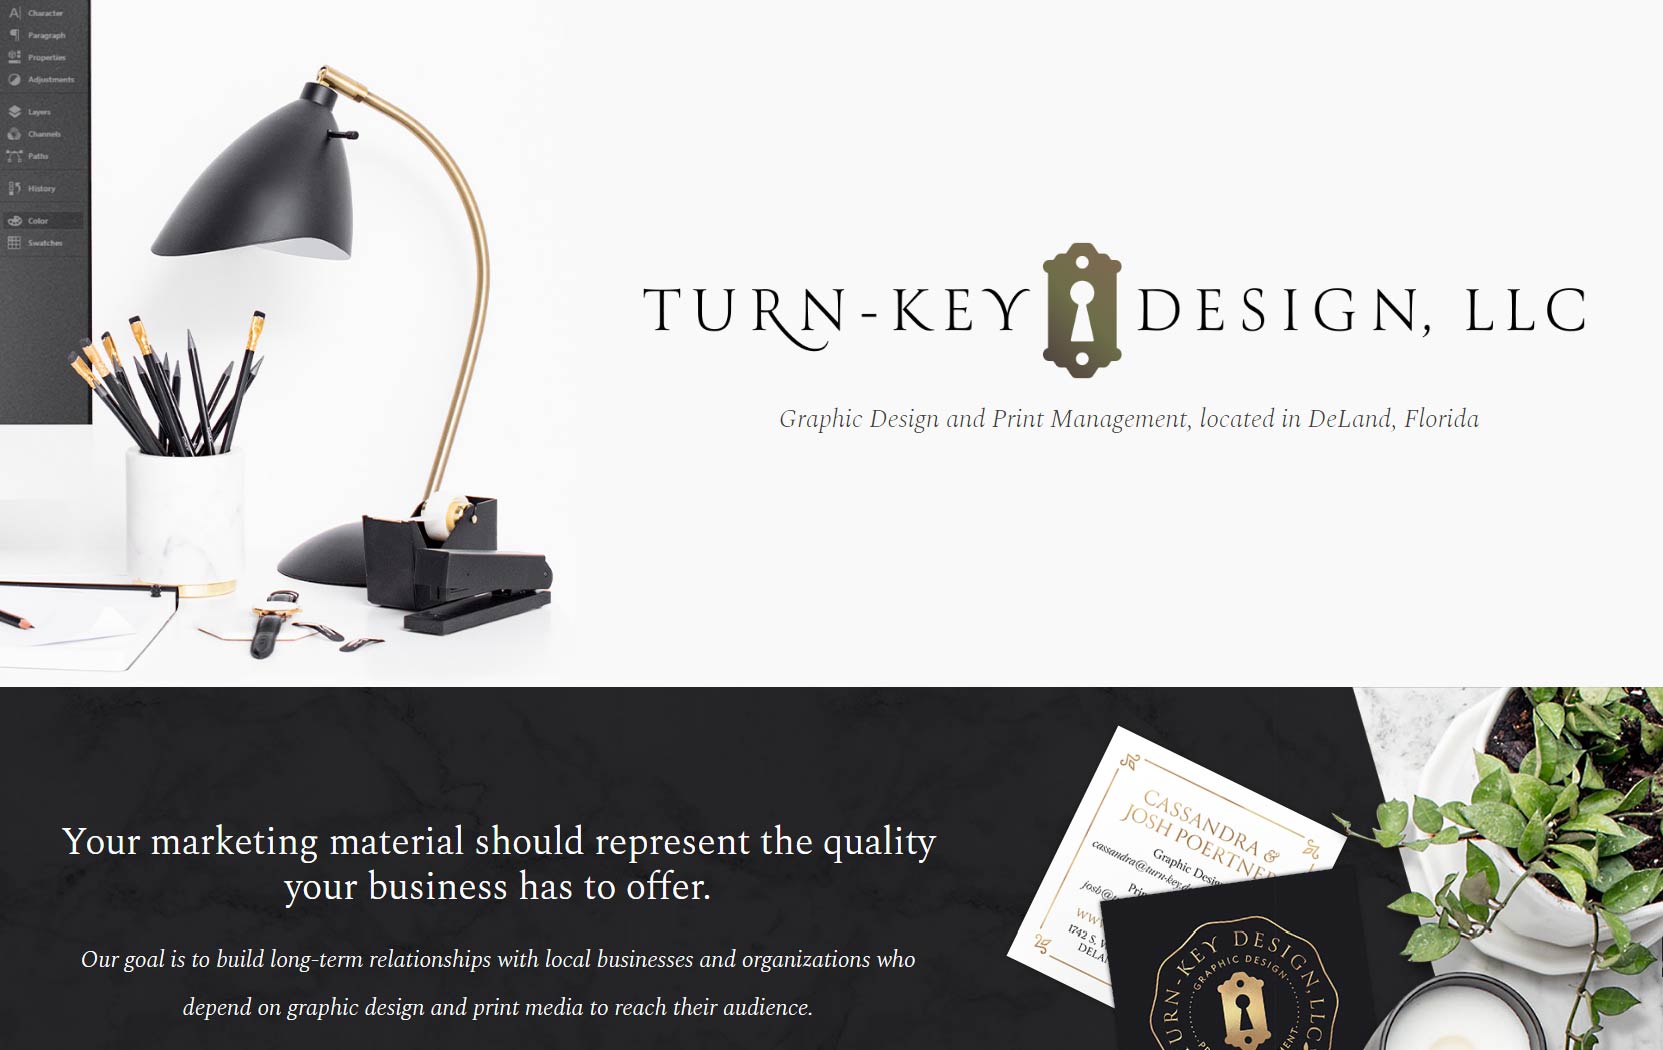 Turn-Key Design